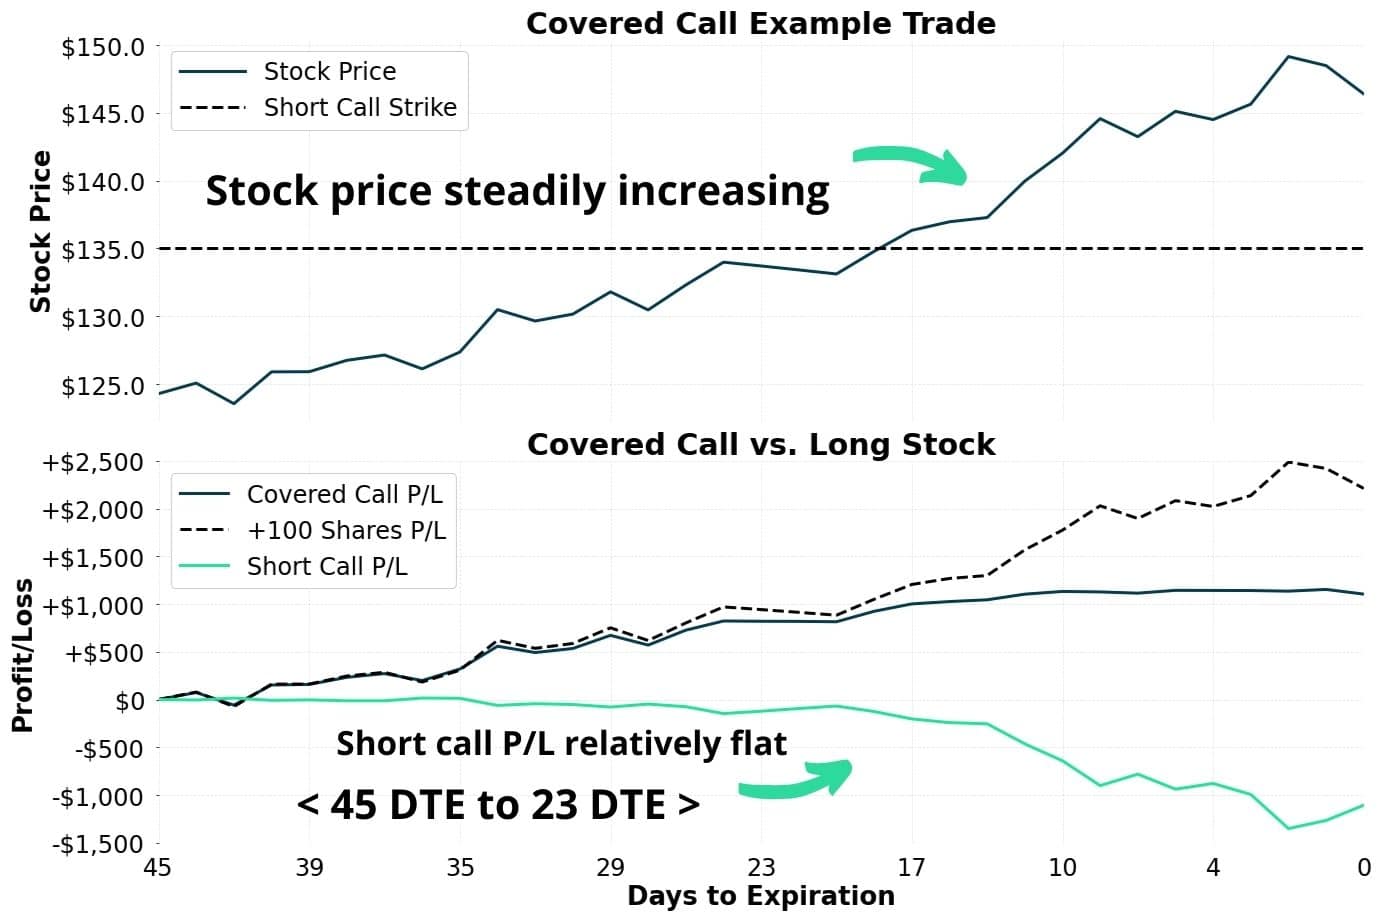 Stock Price Increasing vs Option Extrinsic Value